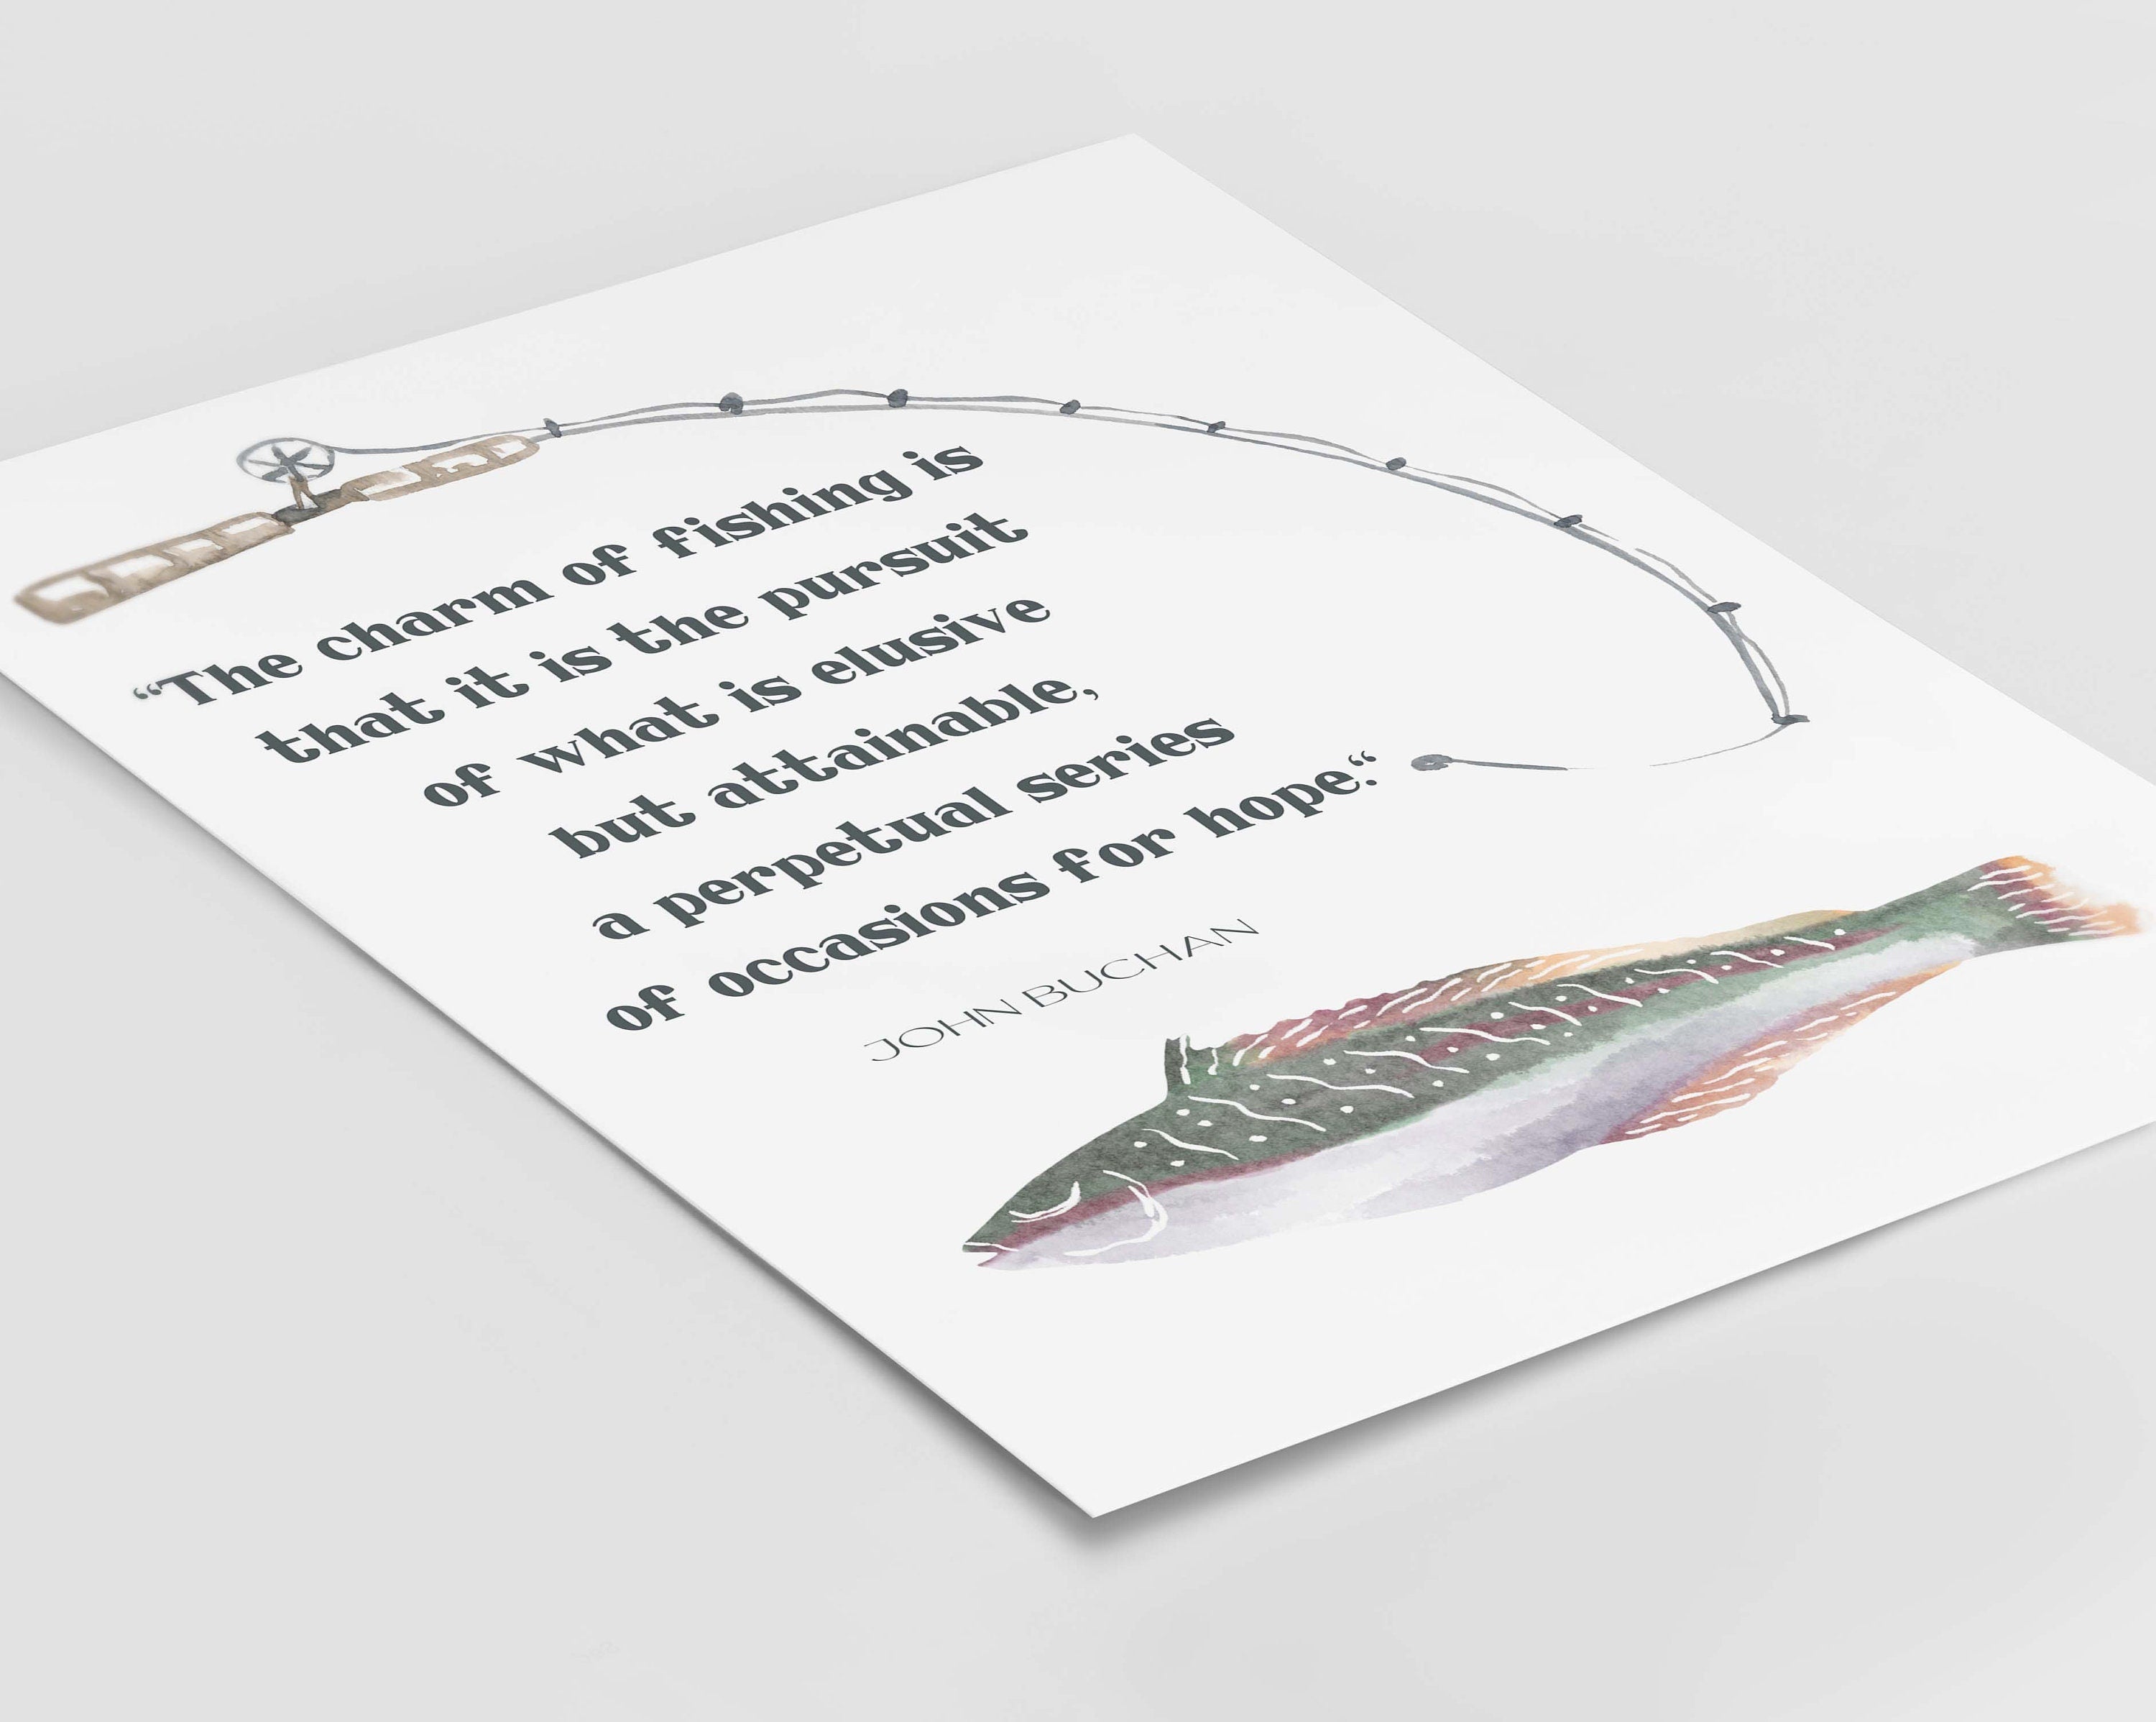 Fishing Quote Print by John Buchan, The Charm Of Fishing Wall Art Prints